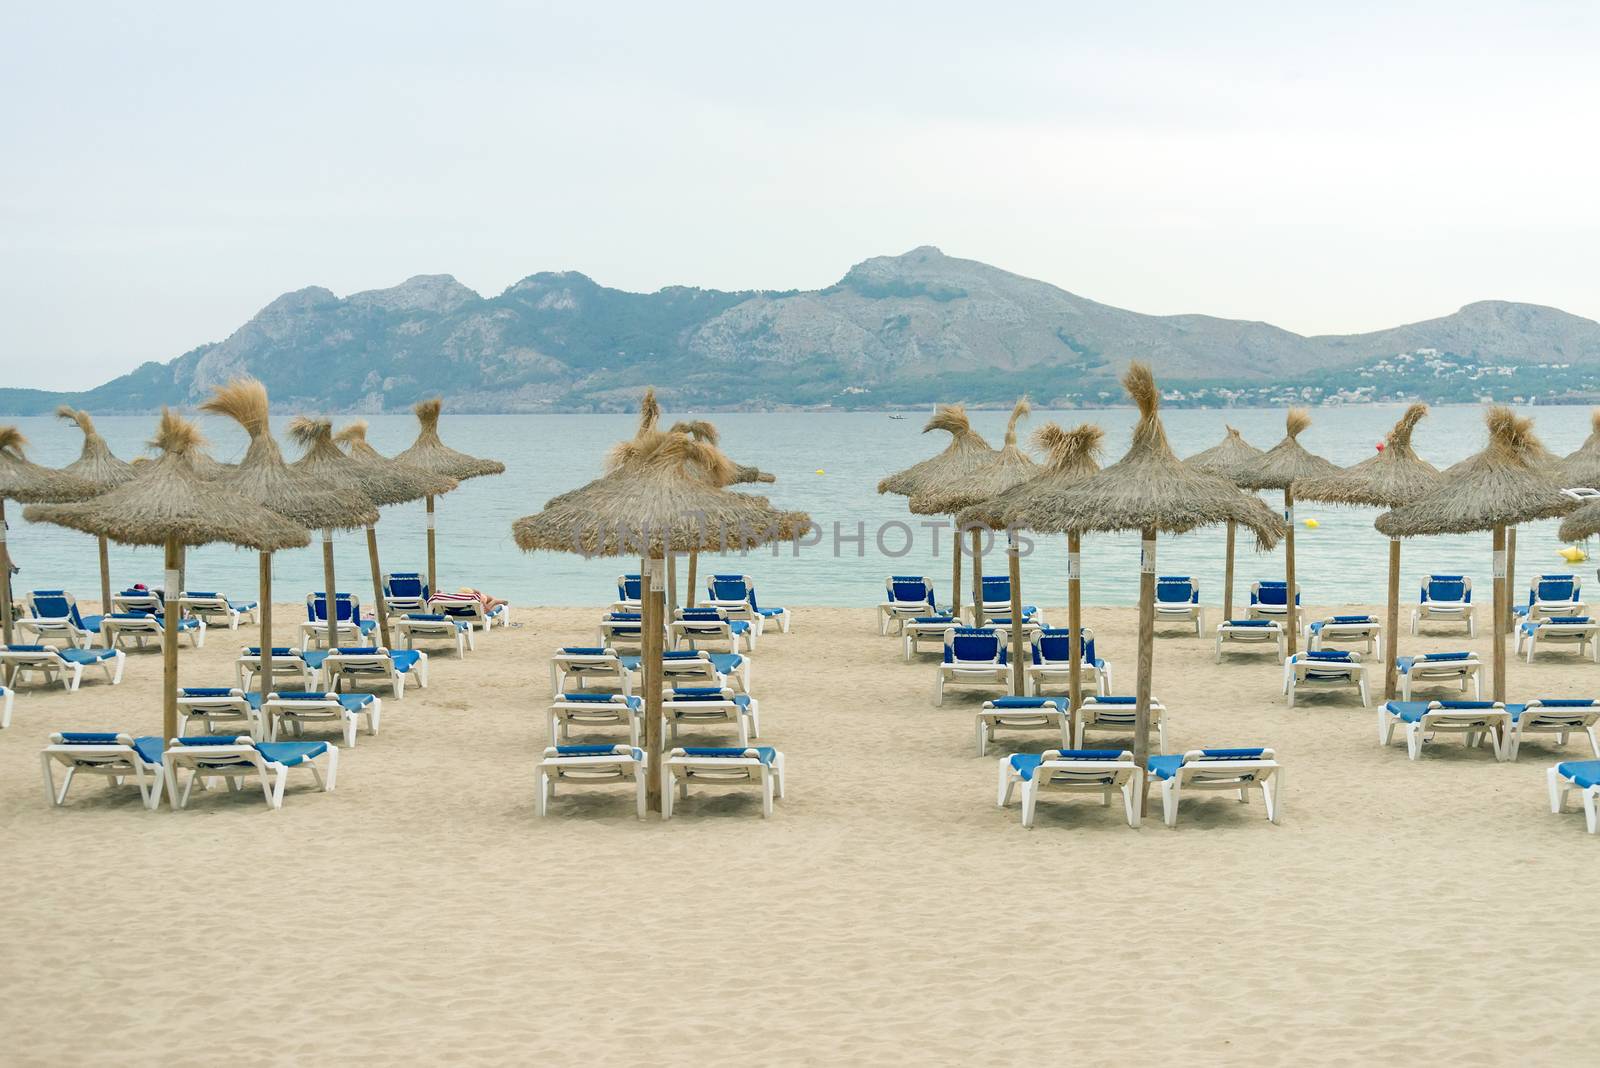 Plenty of sun loungers on the beach. by dmitrimaruta